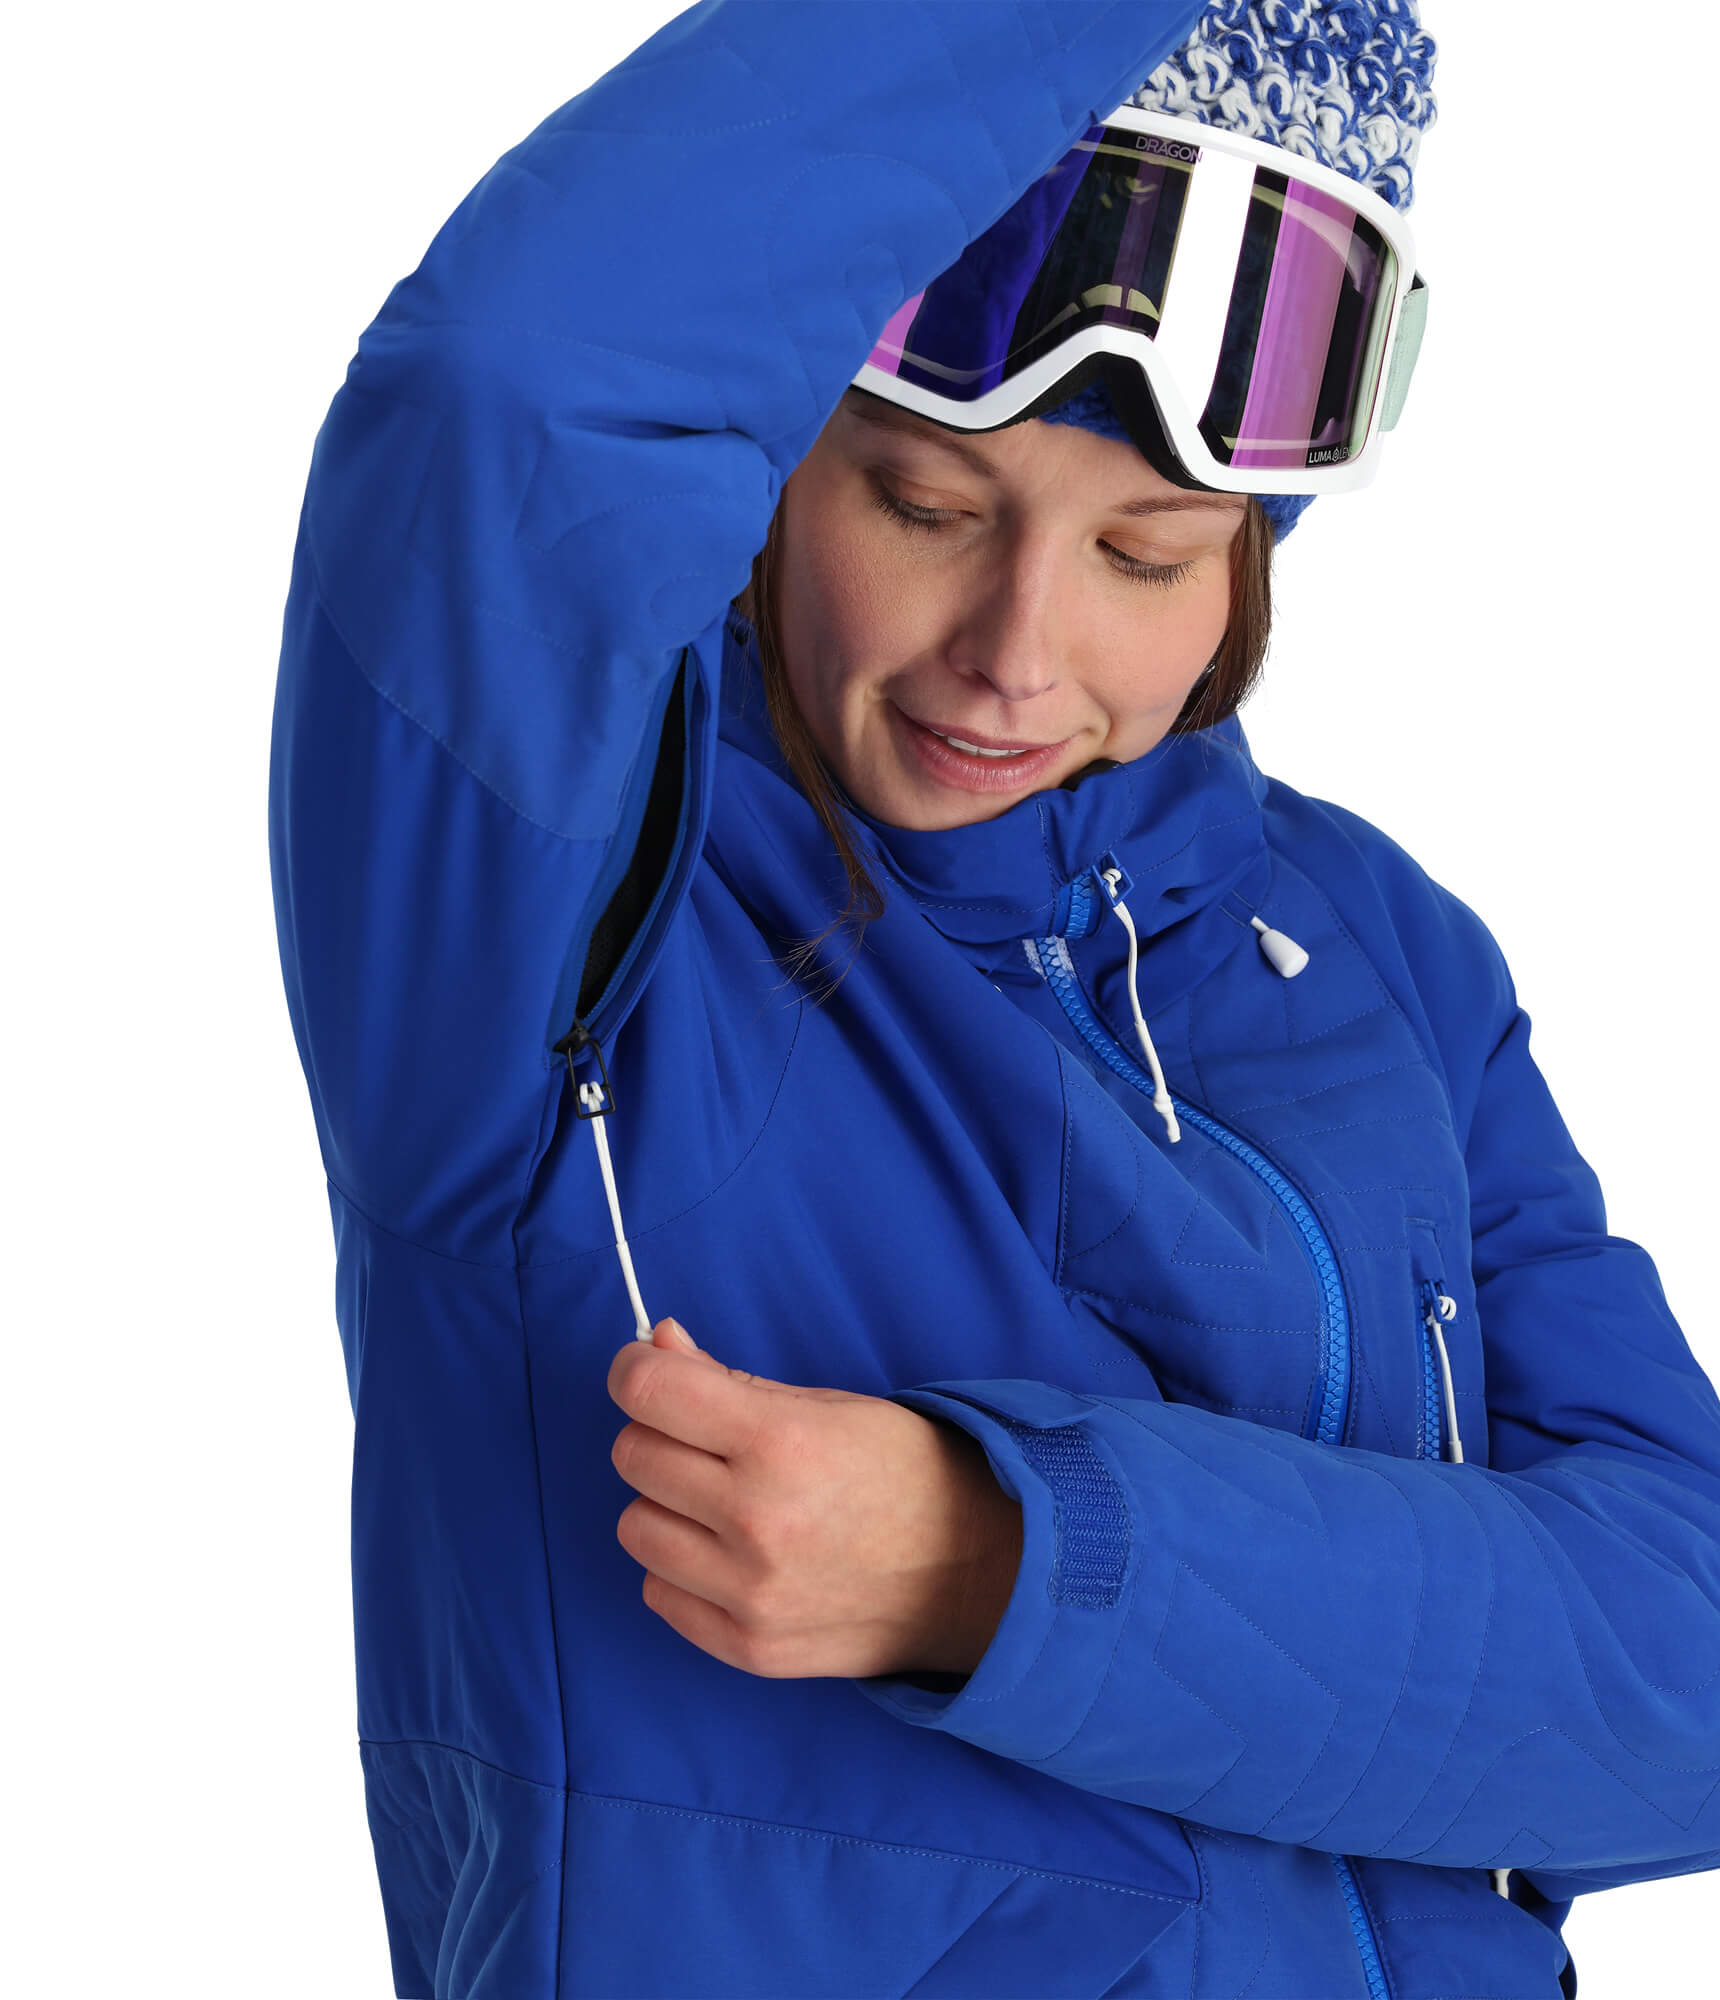 Spyder Palisade Women's Ski/Snowboard Jacket